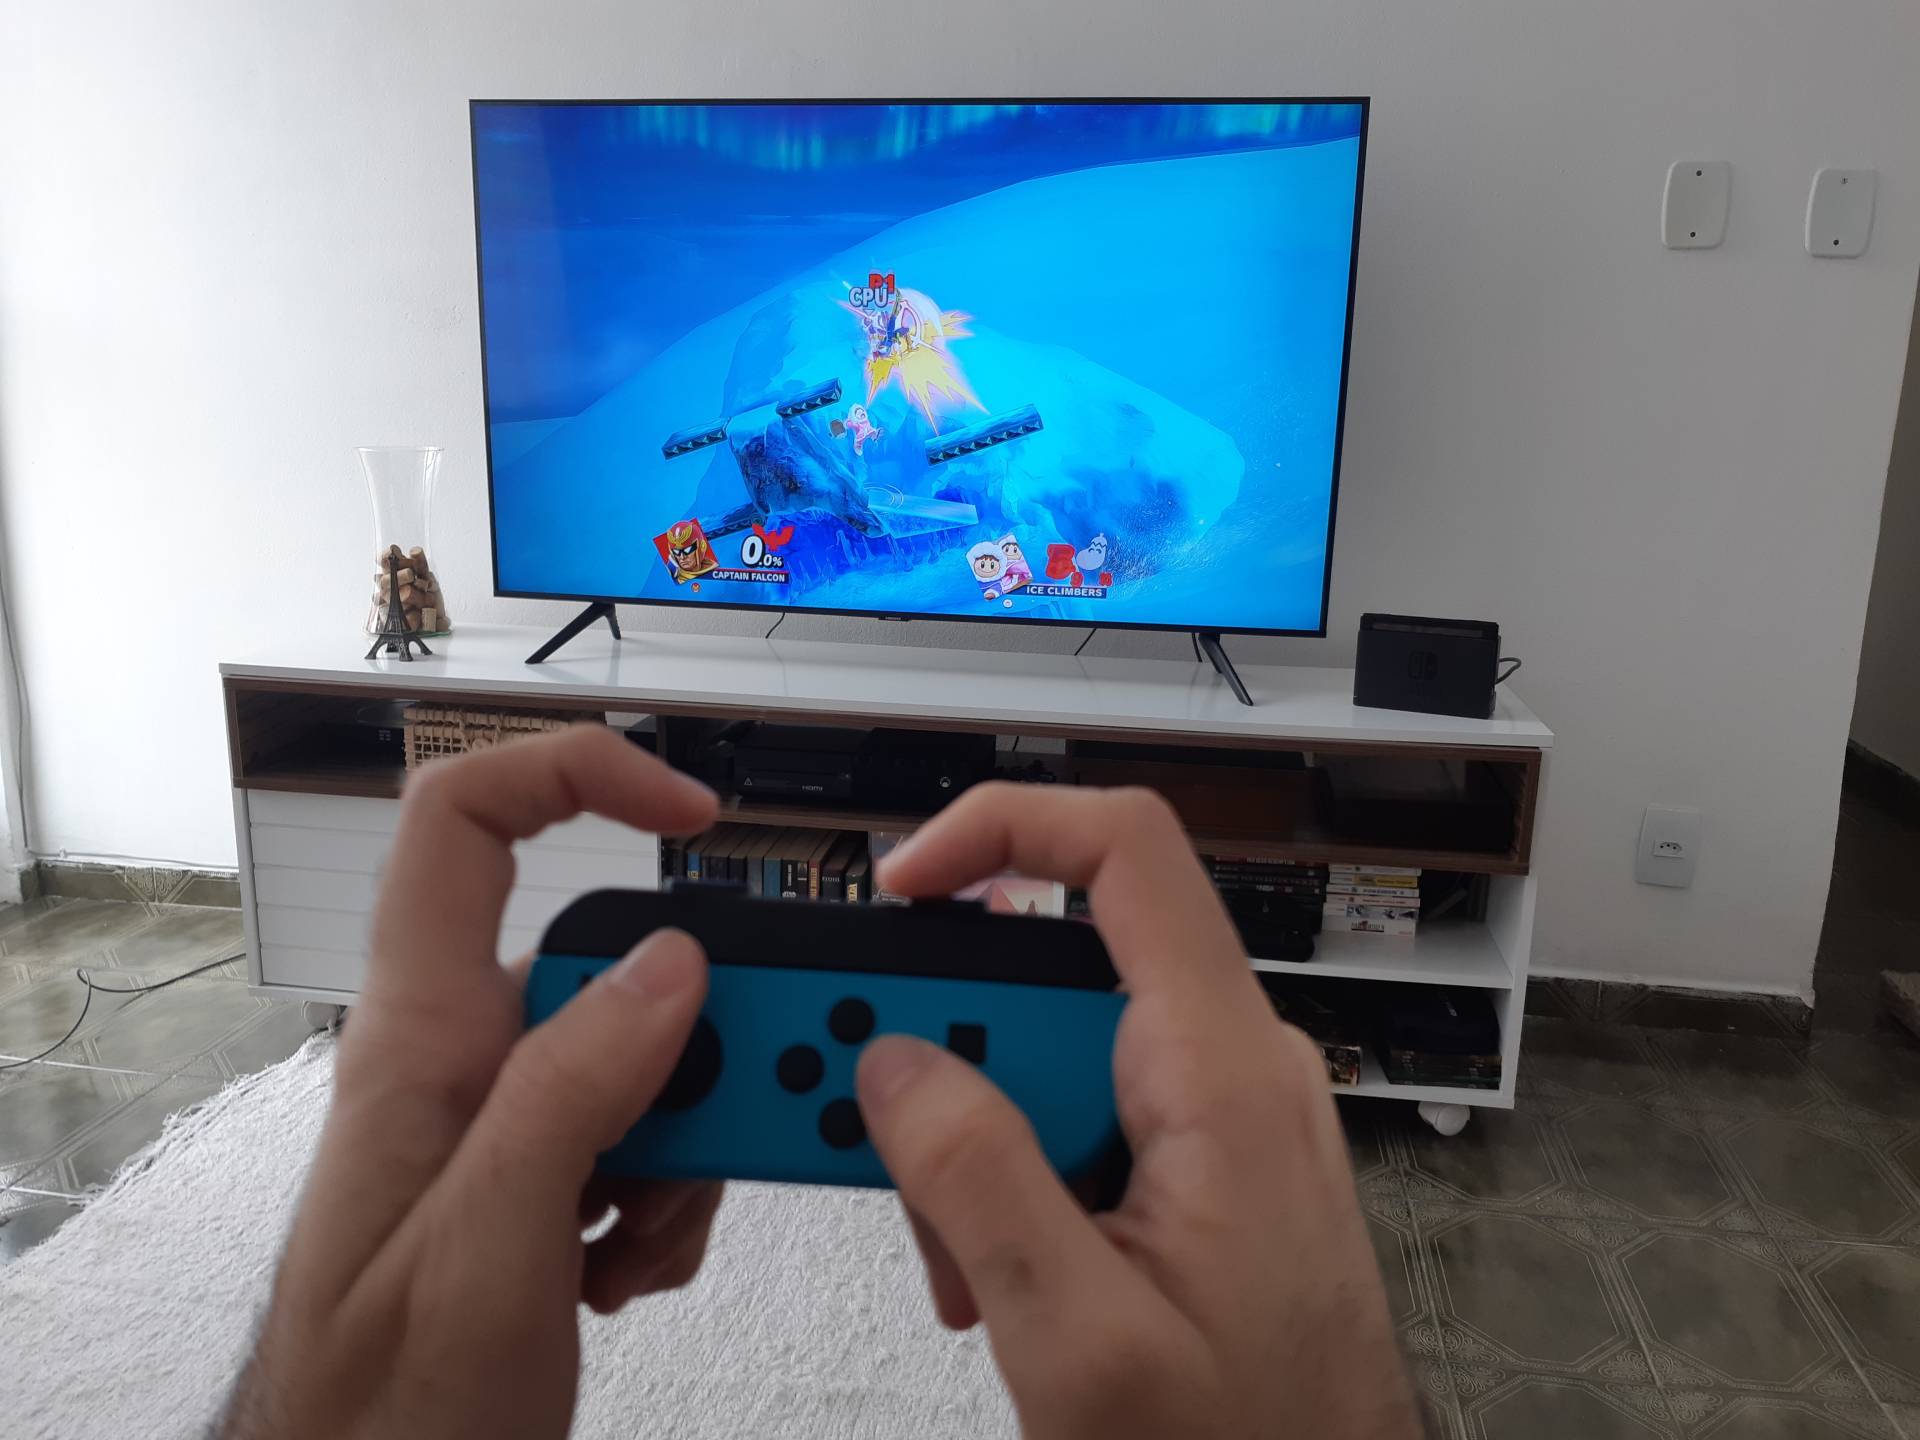 Jogo Nintendo Land - Wii U - Brasil Games - Console PS5 - Jogos para PS4 -  Jogos para Xbox One - Jogos par Nintendo Switch - Cartões PSN - PC Gamer